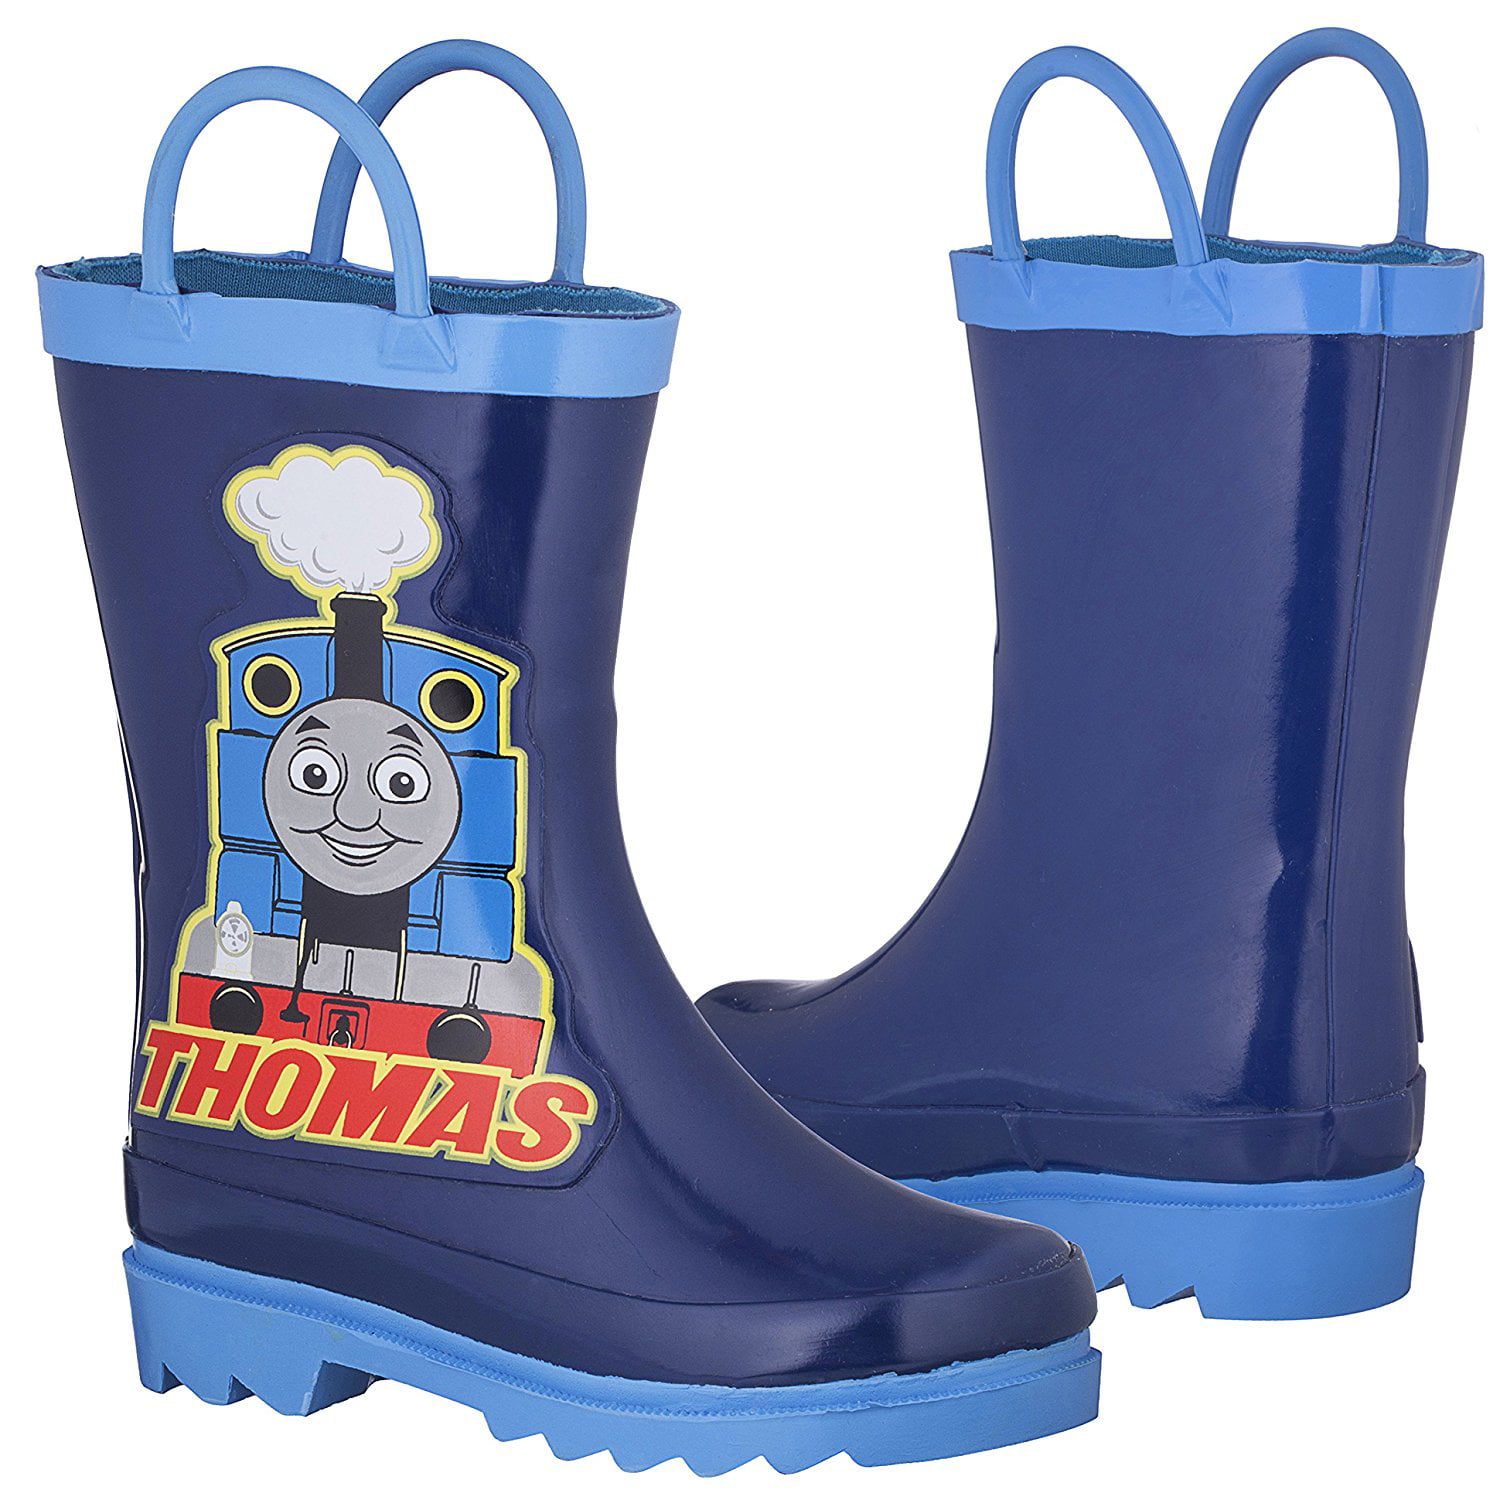 BOYS BLUE THOMAS THE TANK ENGINE WELLIES RAIN SPLASH WATERPROOF BOOTS UK 6-12 